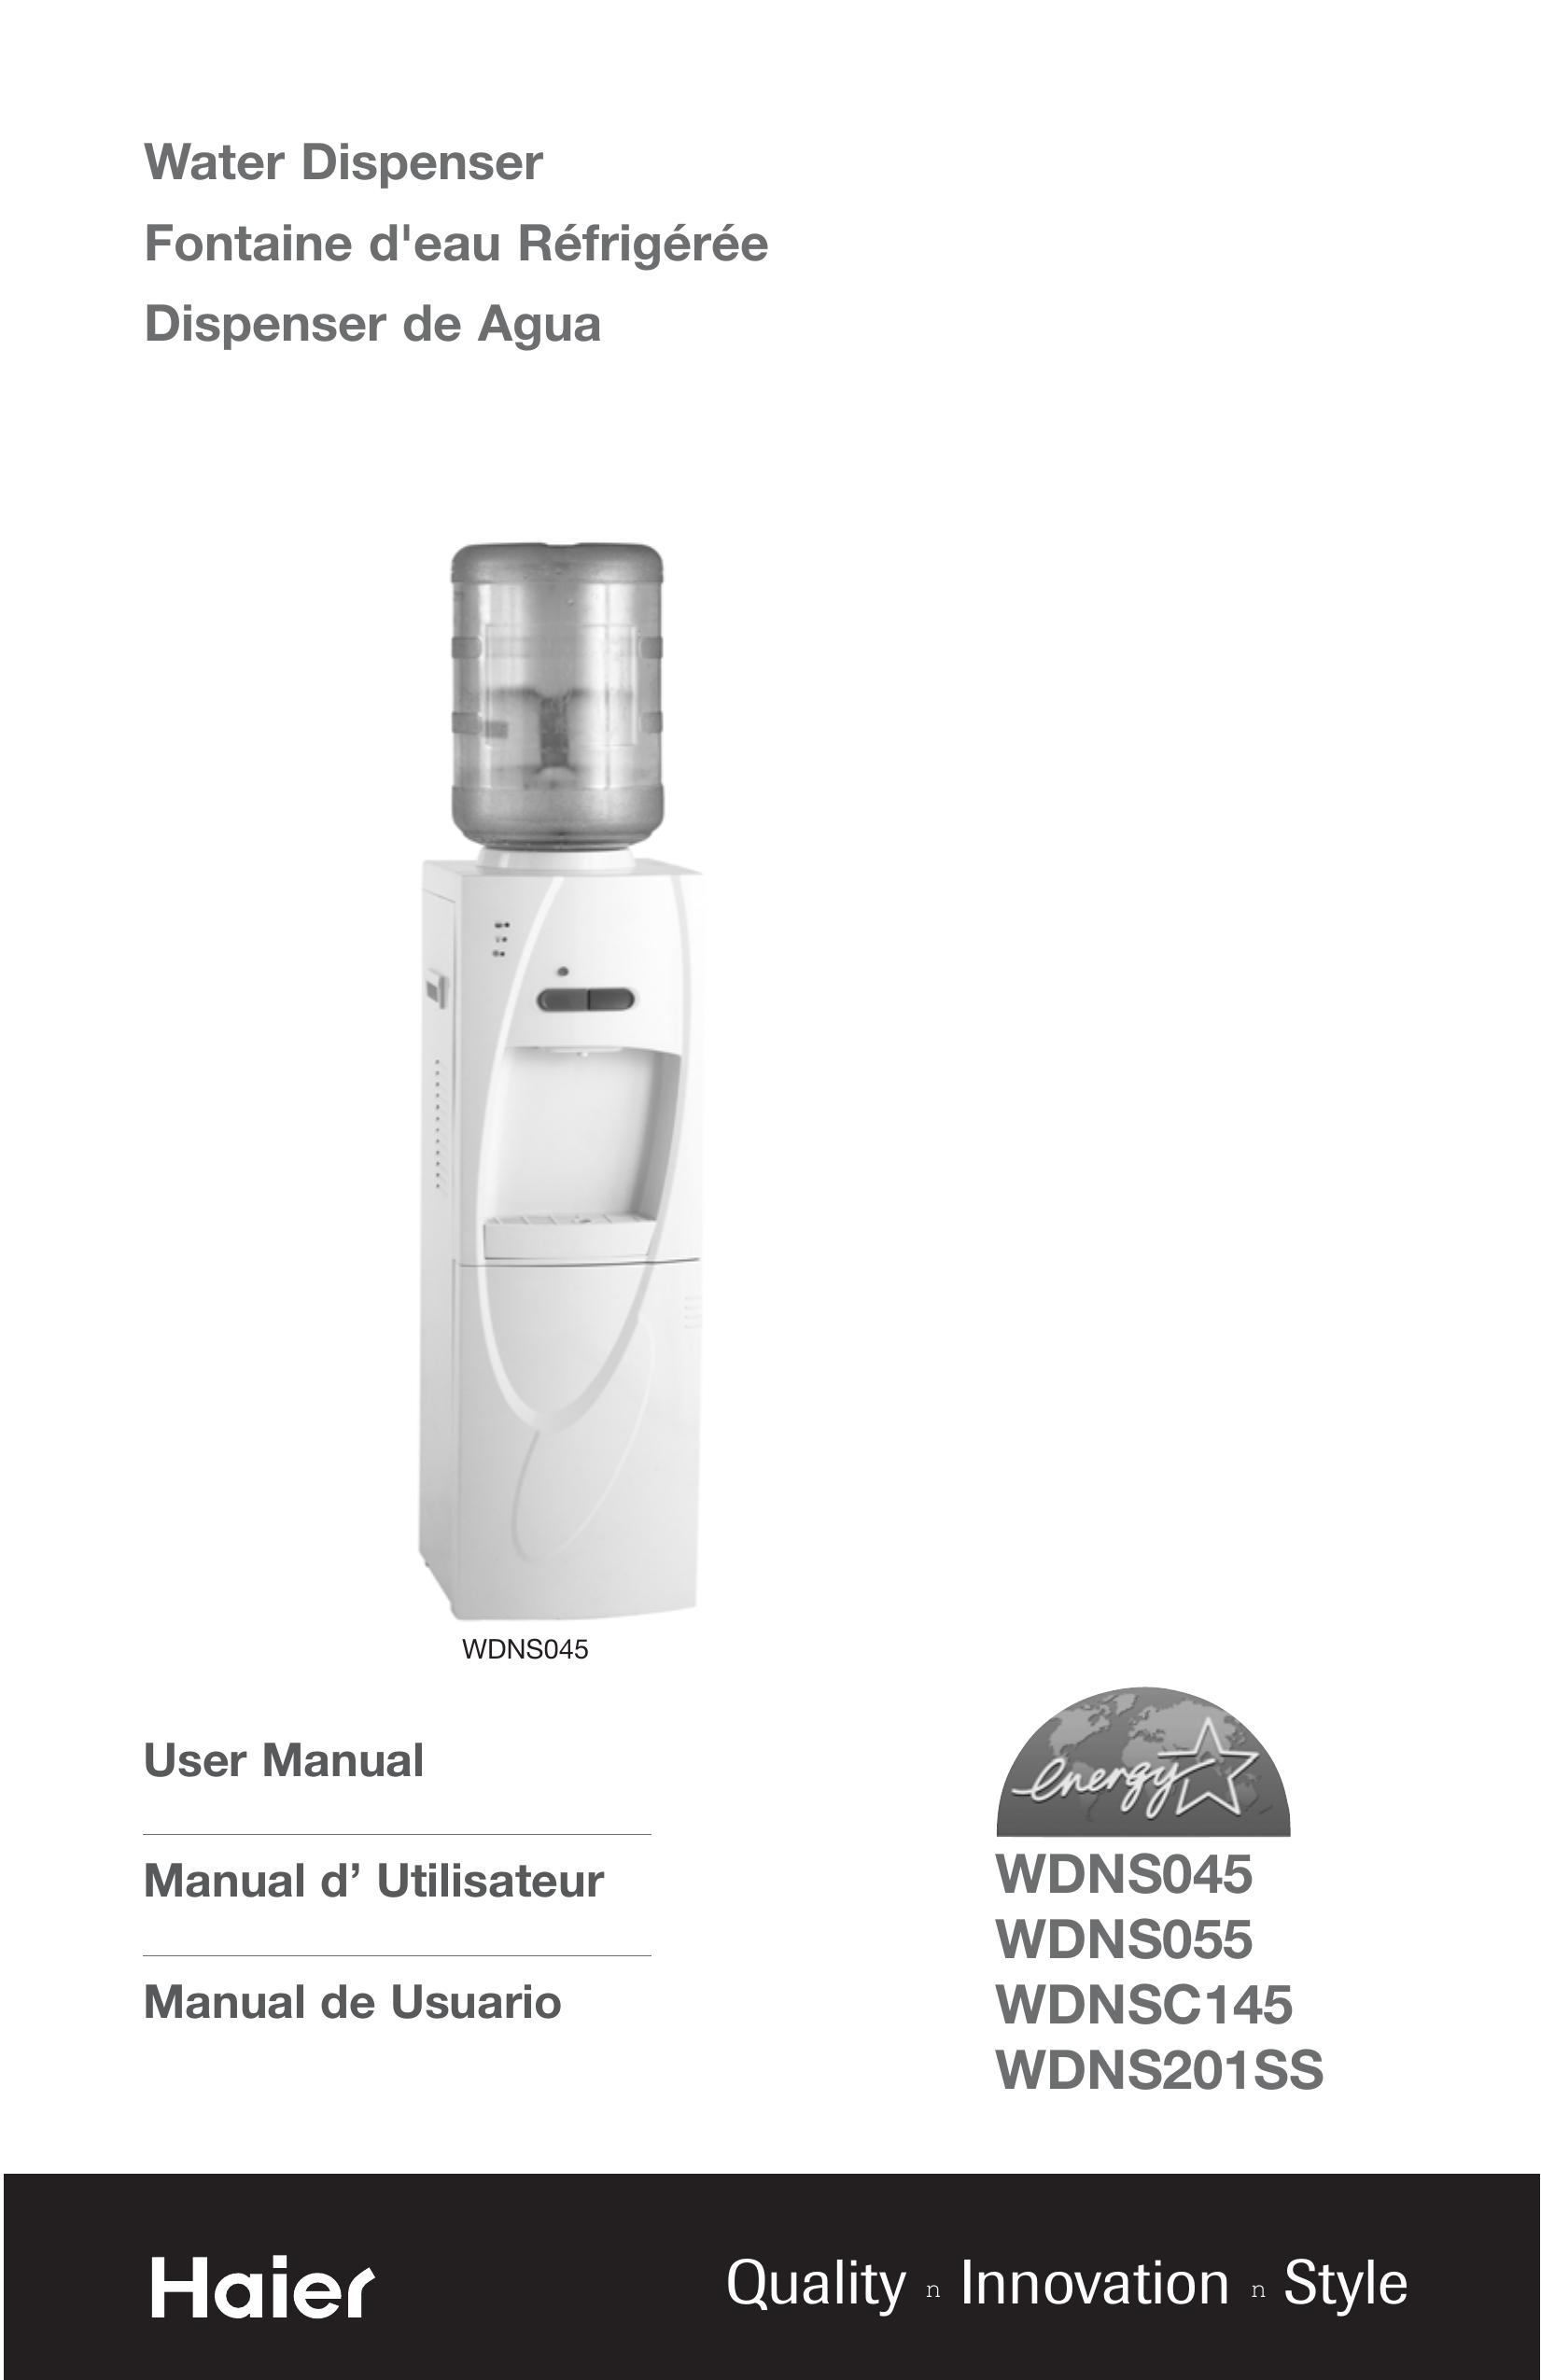 Haier WDNS201SS Water Dispenser User Manual